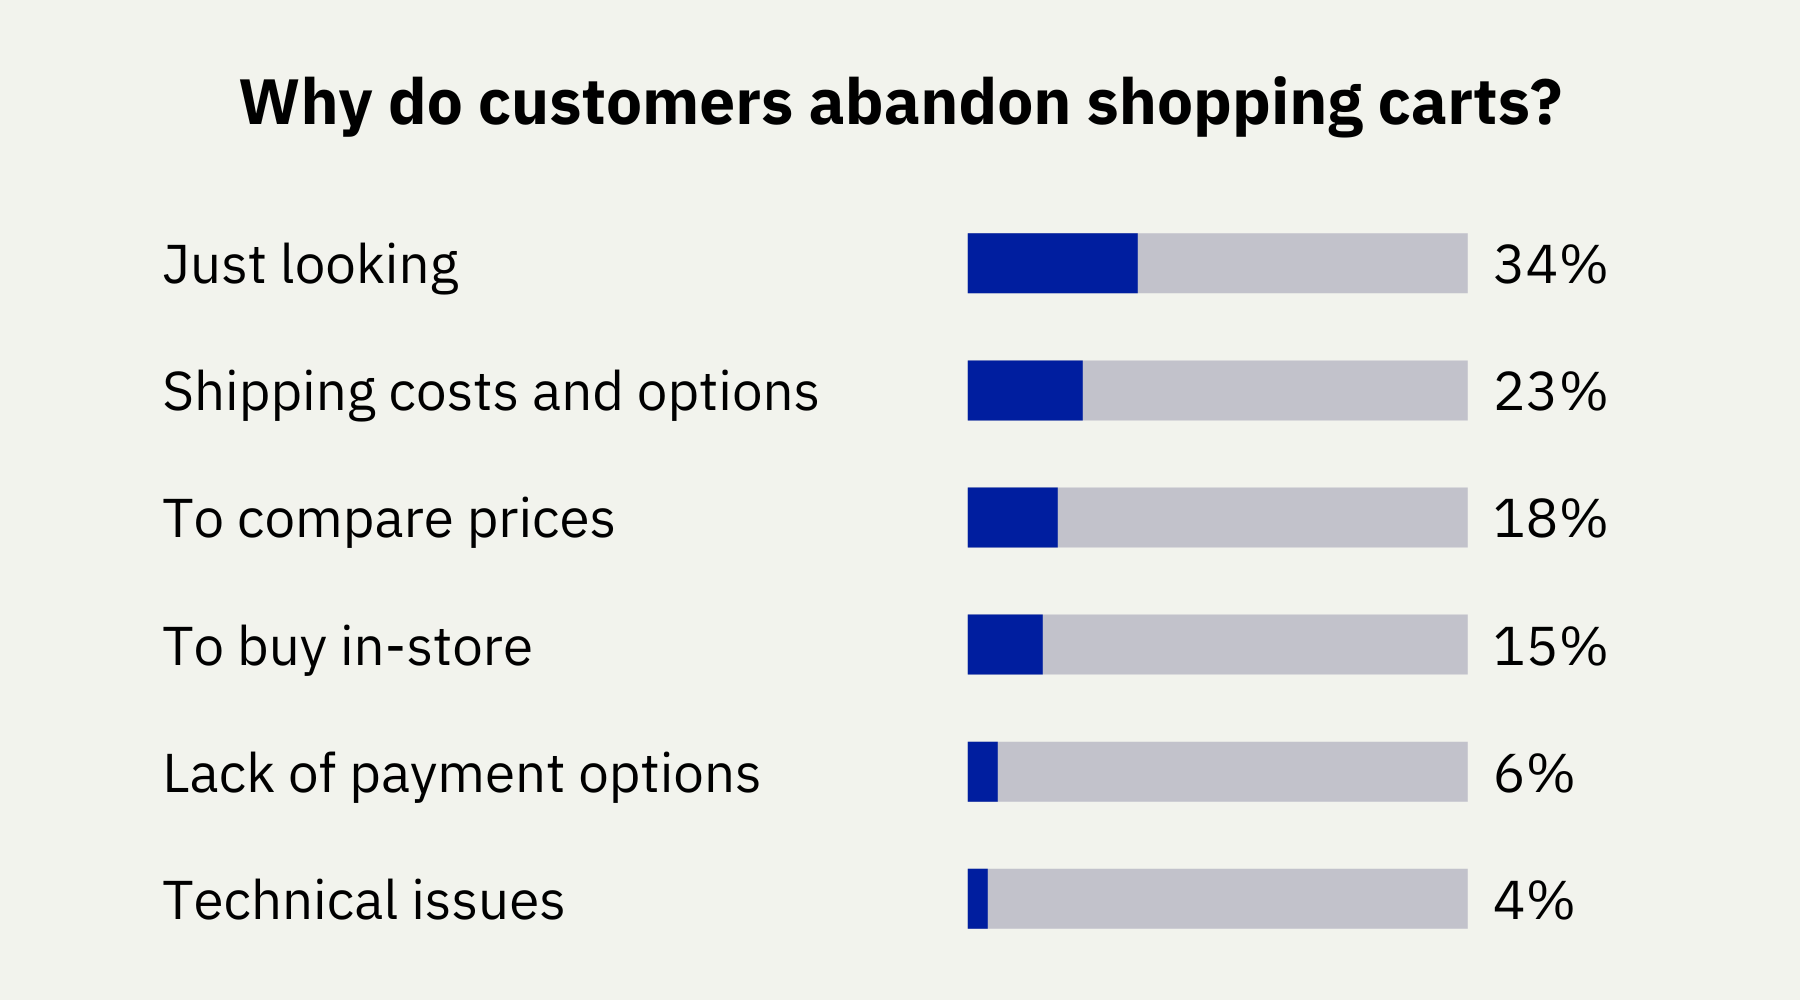 Why do customers abandon their cart